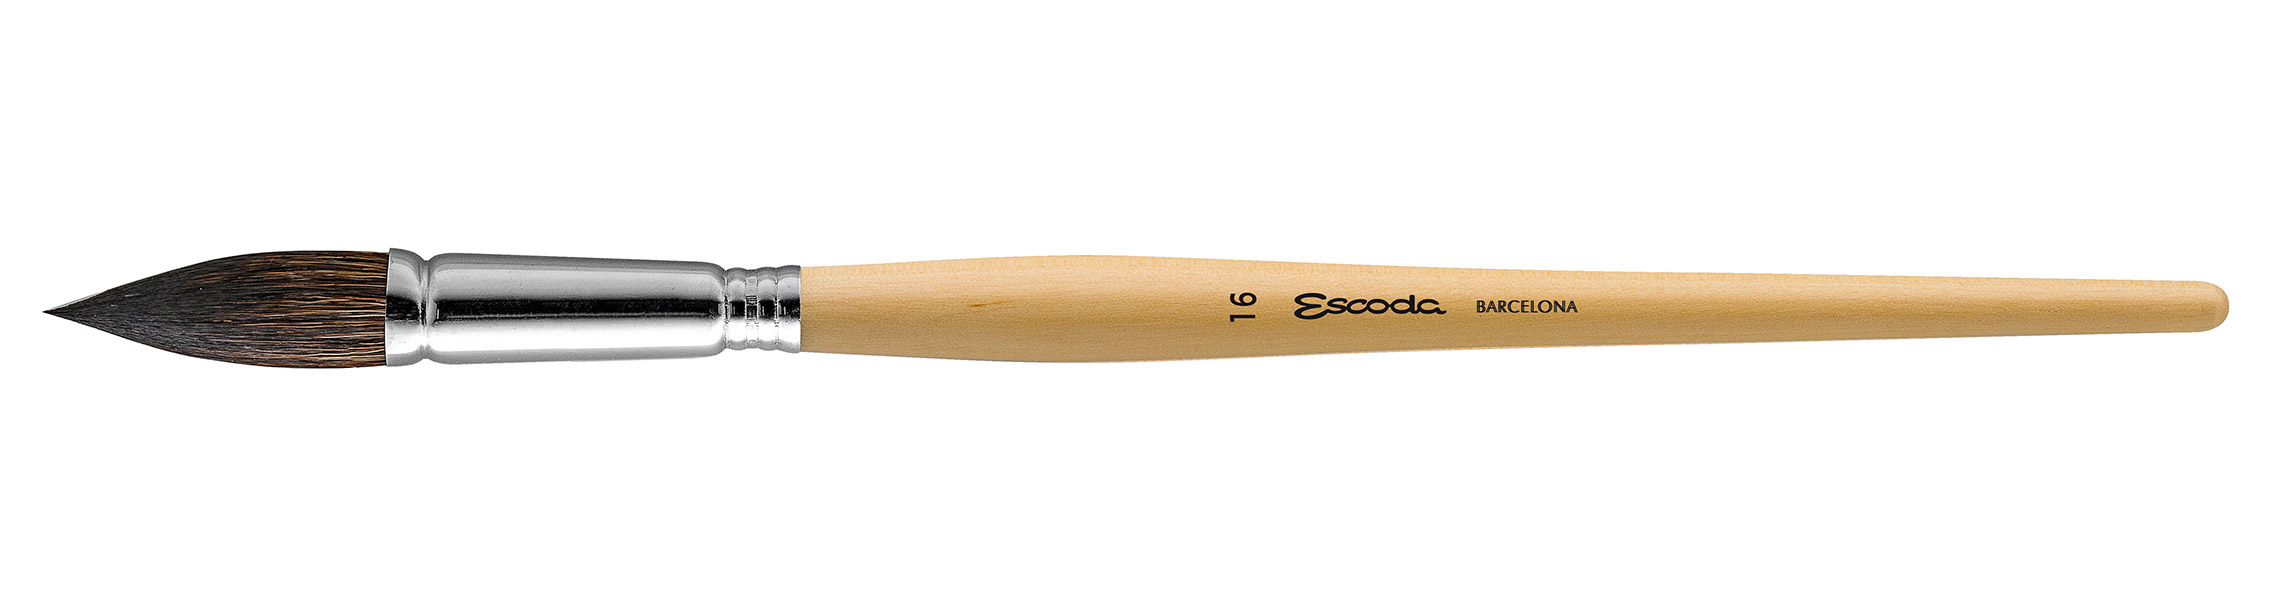 Escoda brushes serie 5934